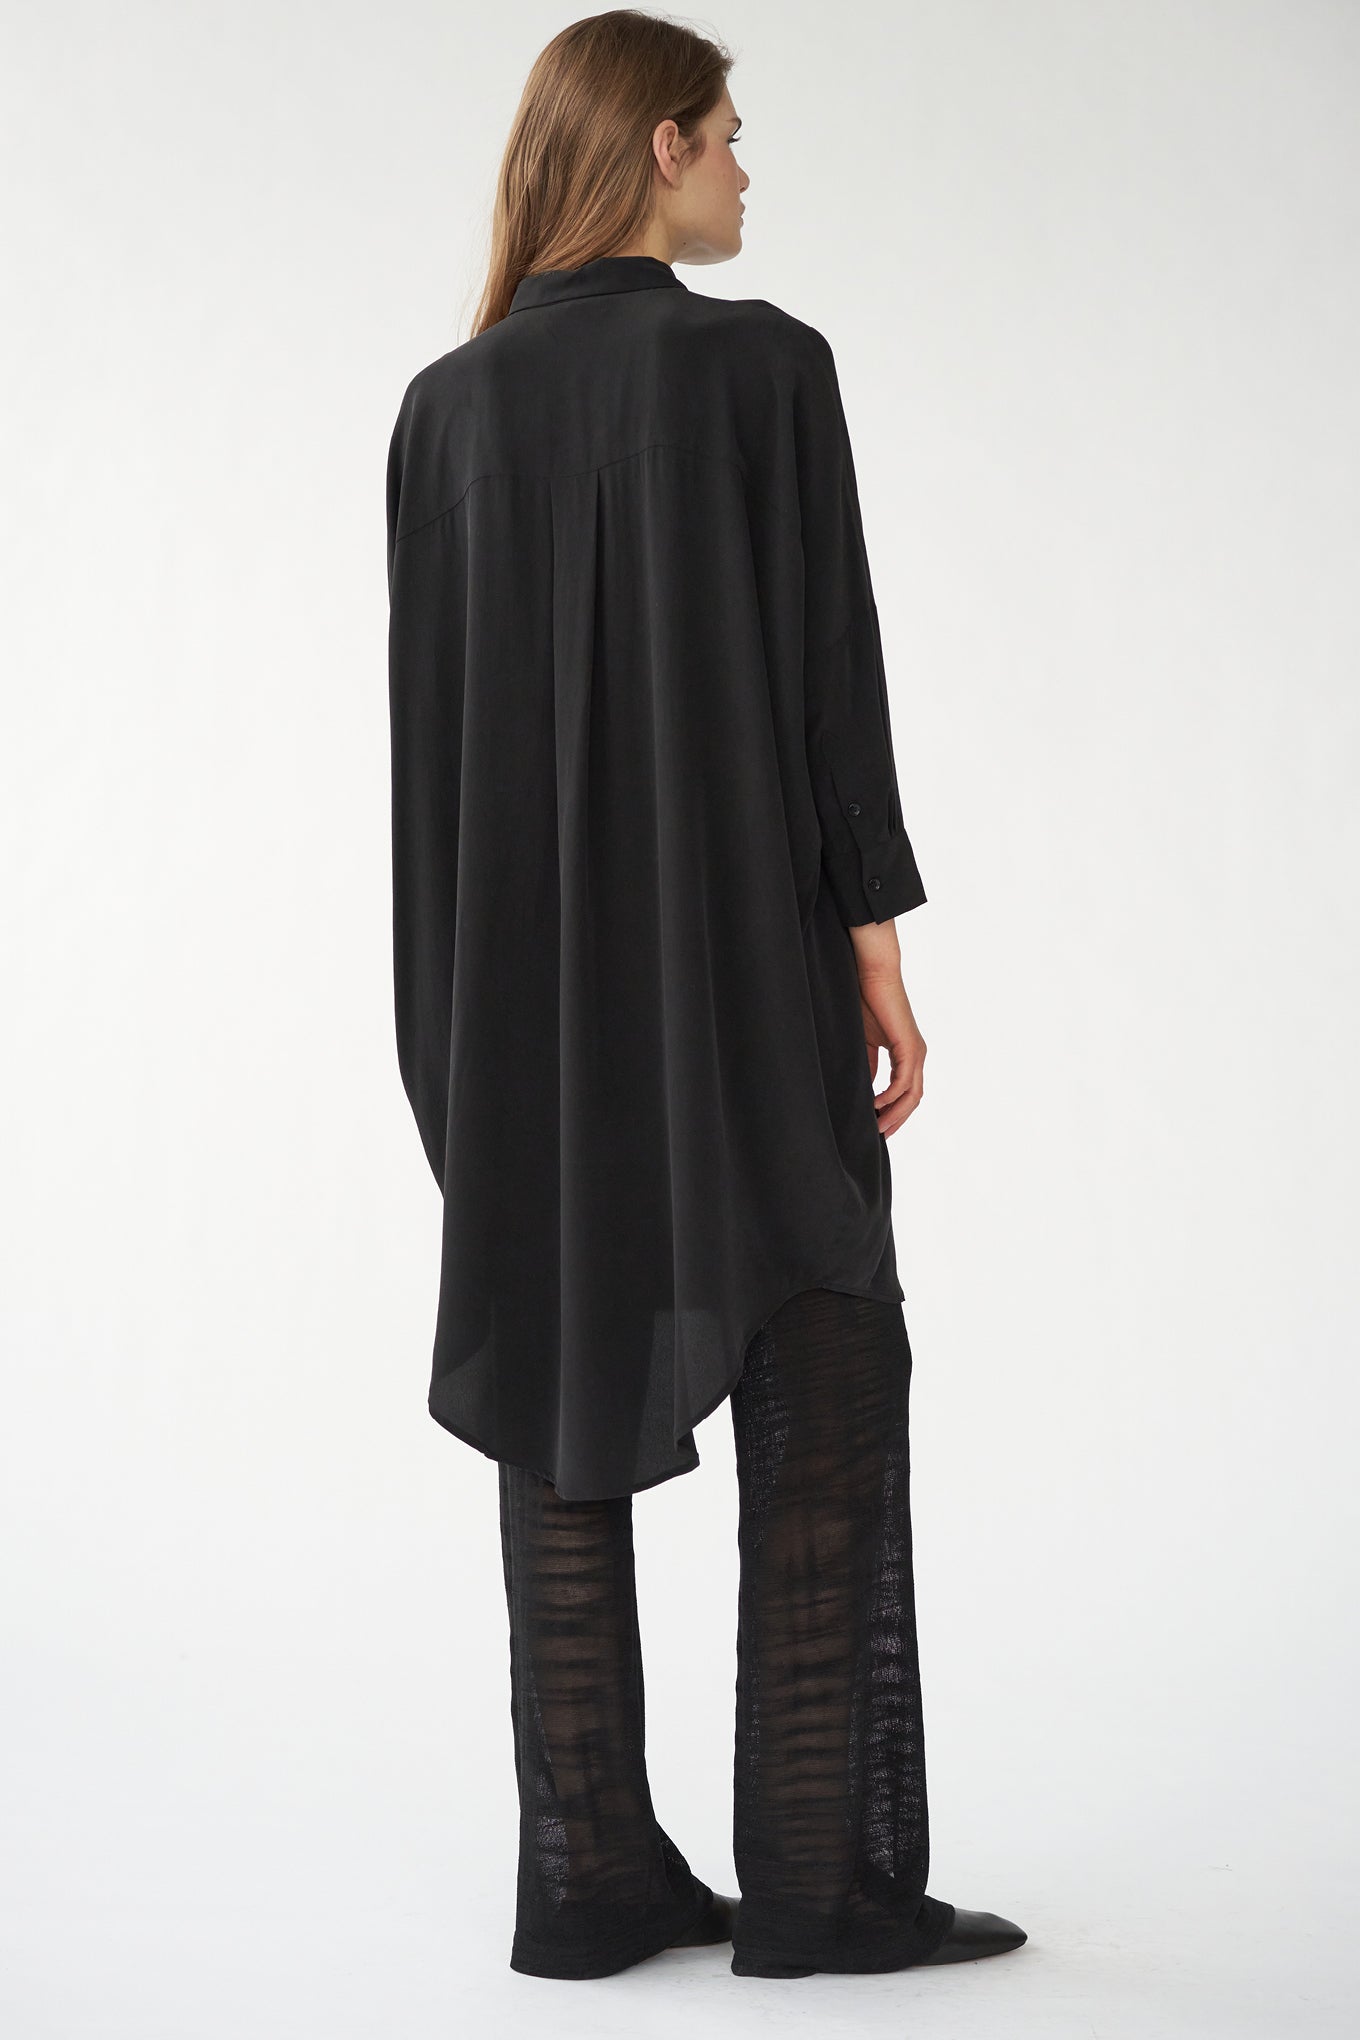 Sima Knit Pants - Black - Silk/Linen/Viscose